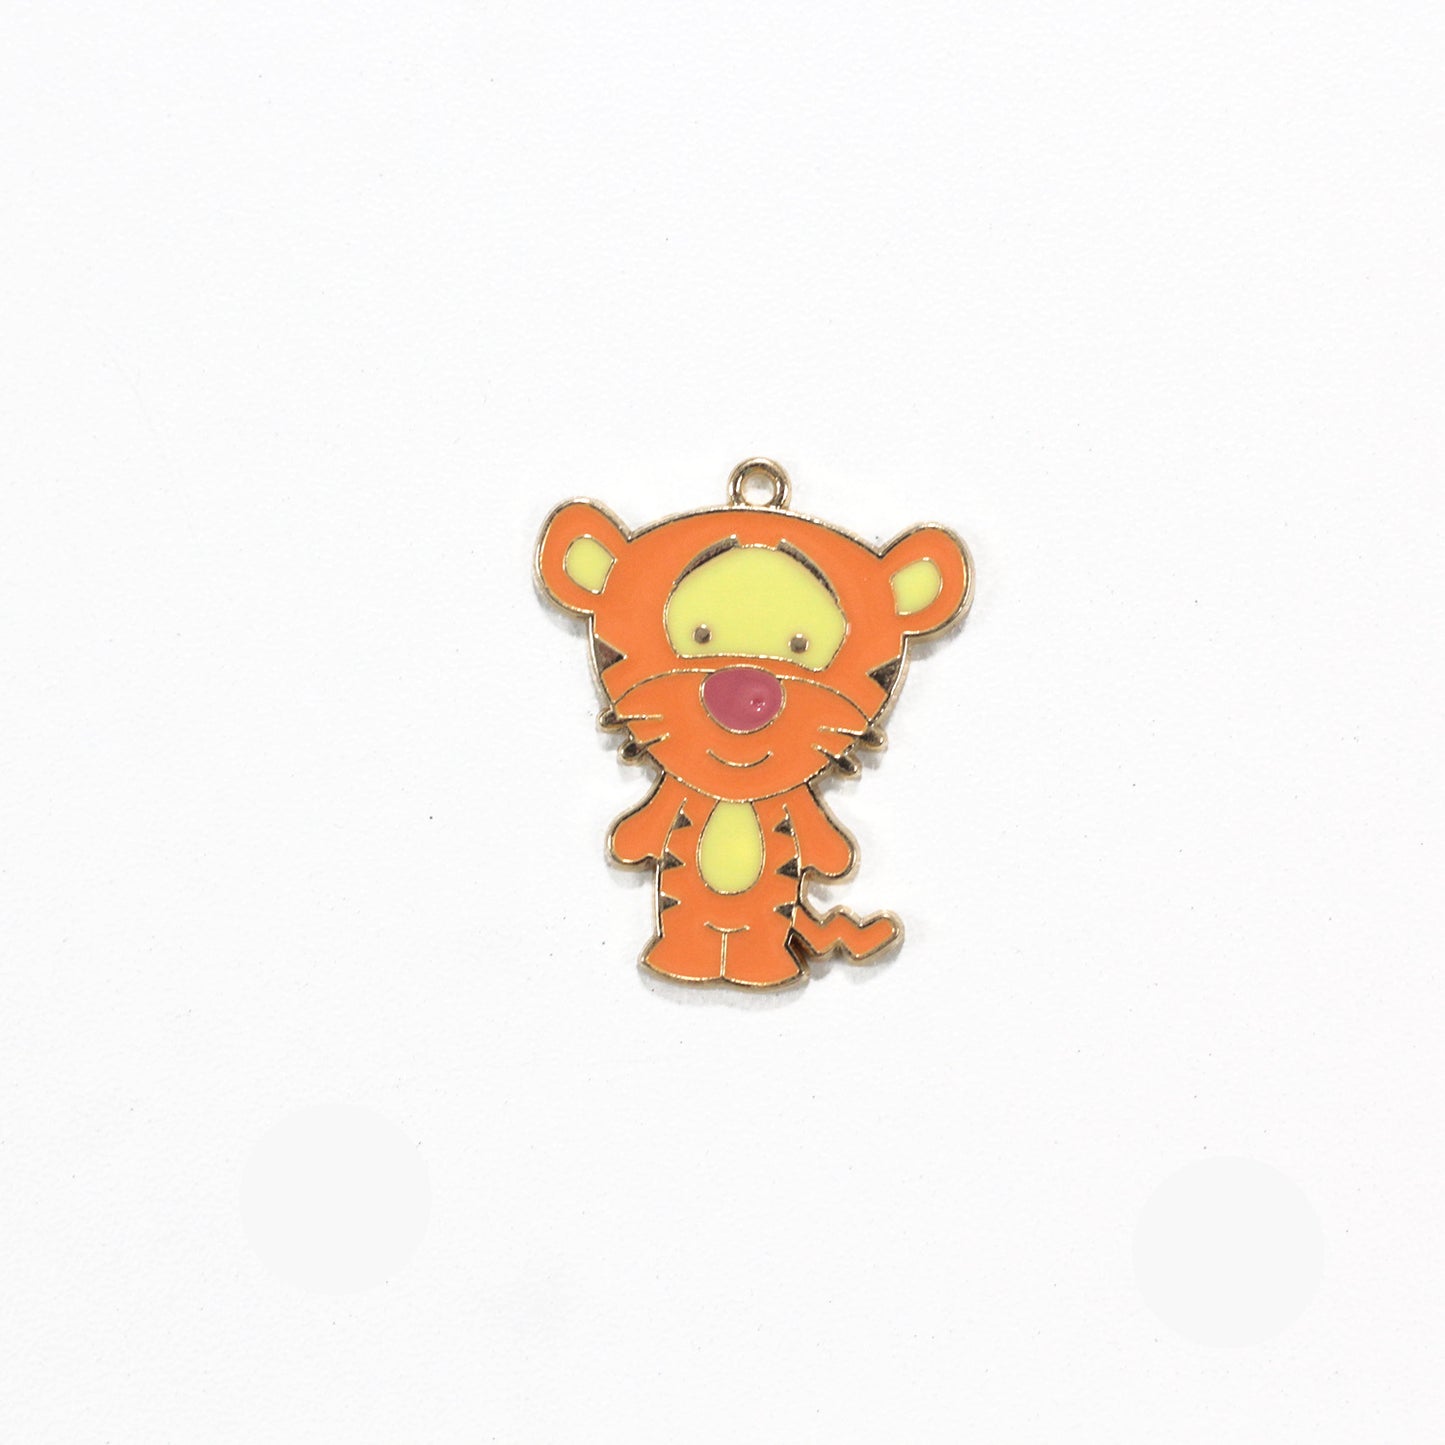 Winnie the Pooh Metal Charms Earrings Accessories Pendant Accessories DIY